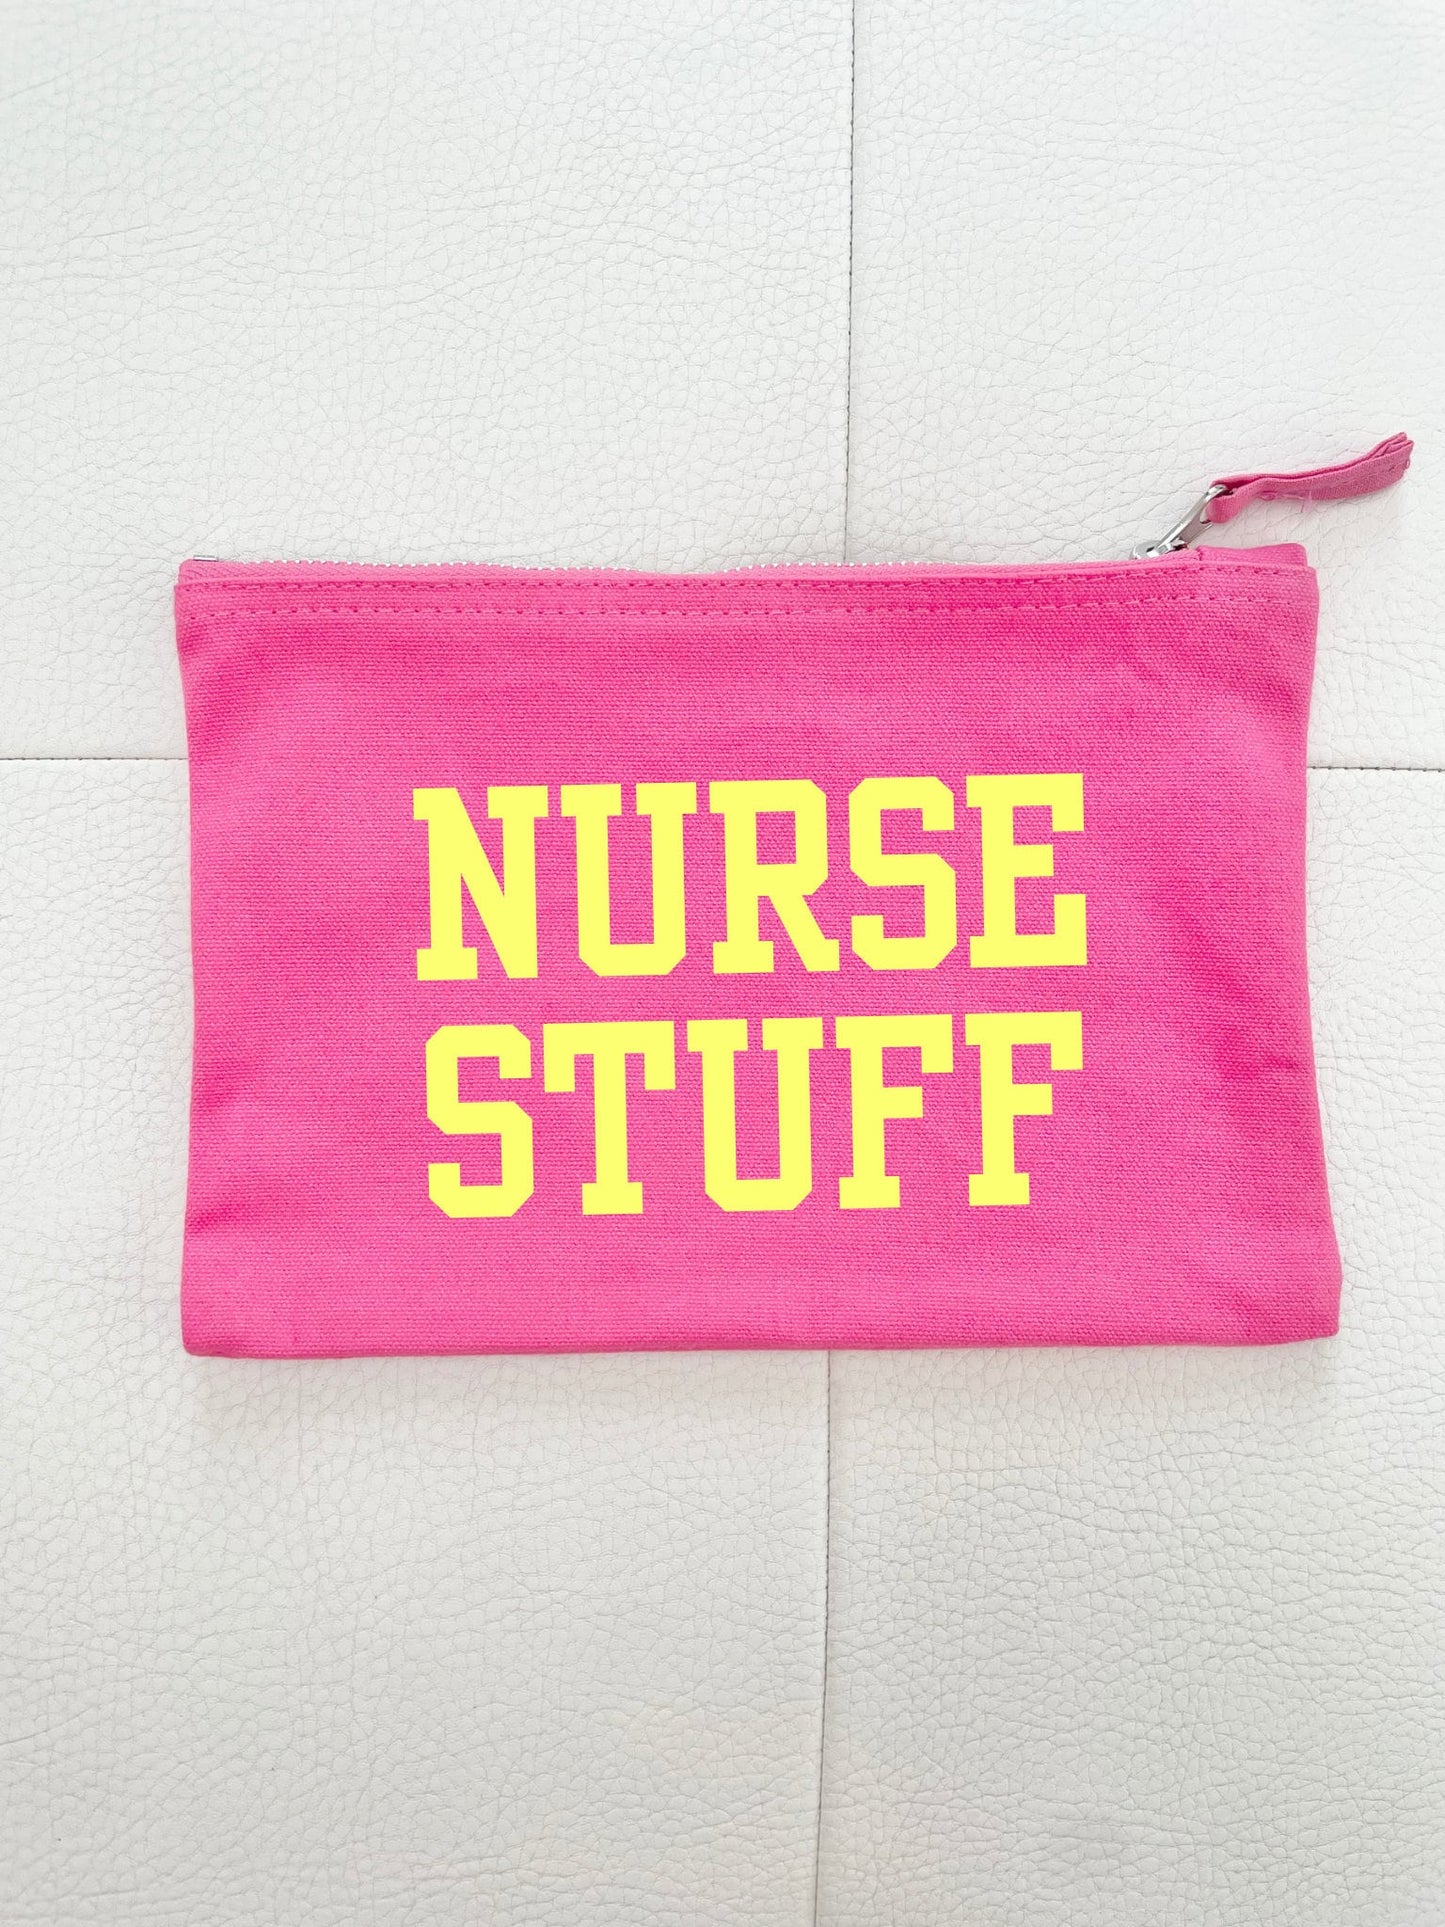 Nurse stuff, personalised nursing gift, nurse graduation present, daughter or friend student nurse present, good luck new nursing job